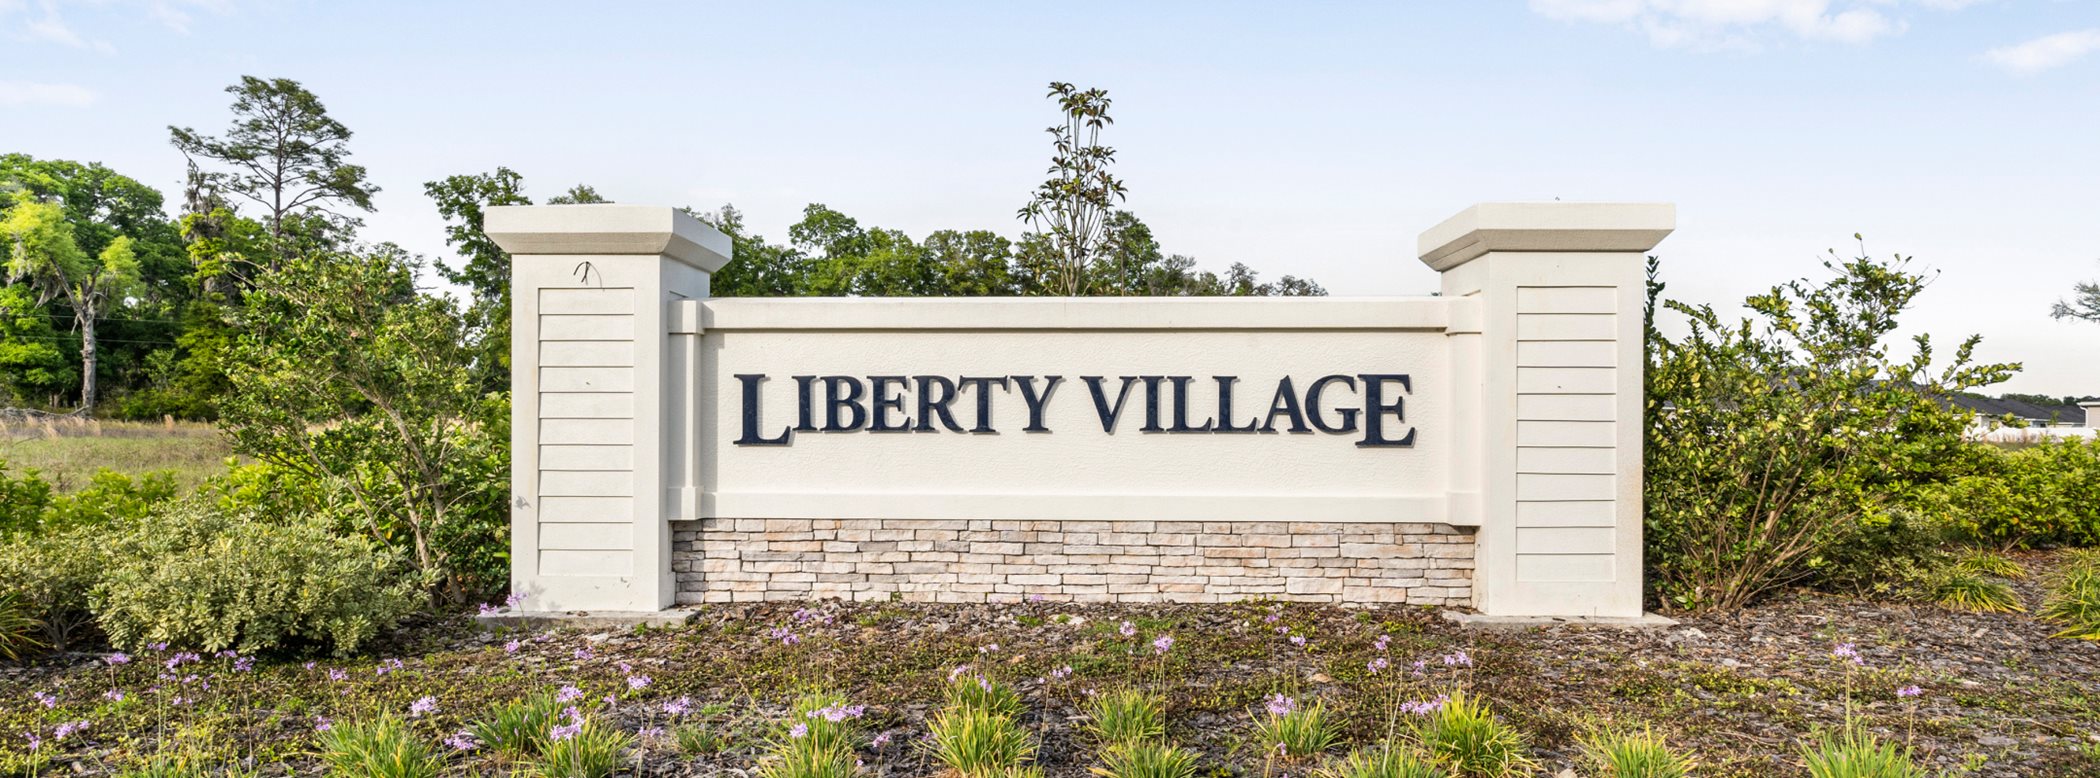 Liberty Village entrance monument sign